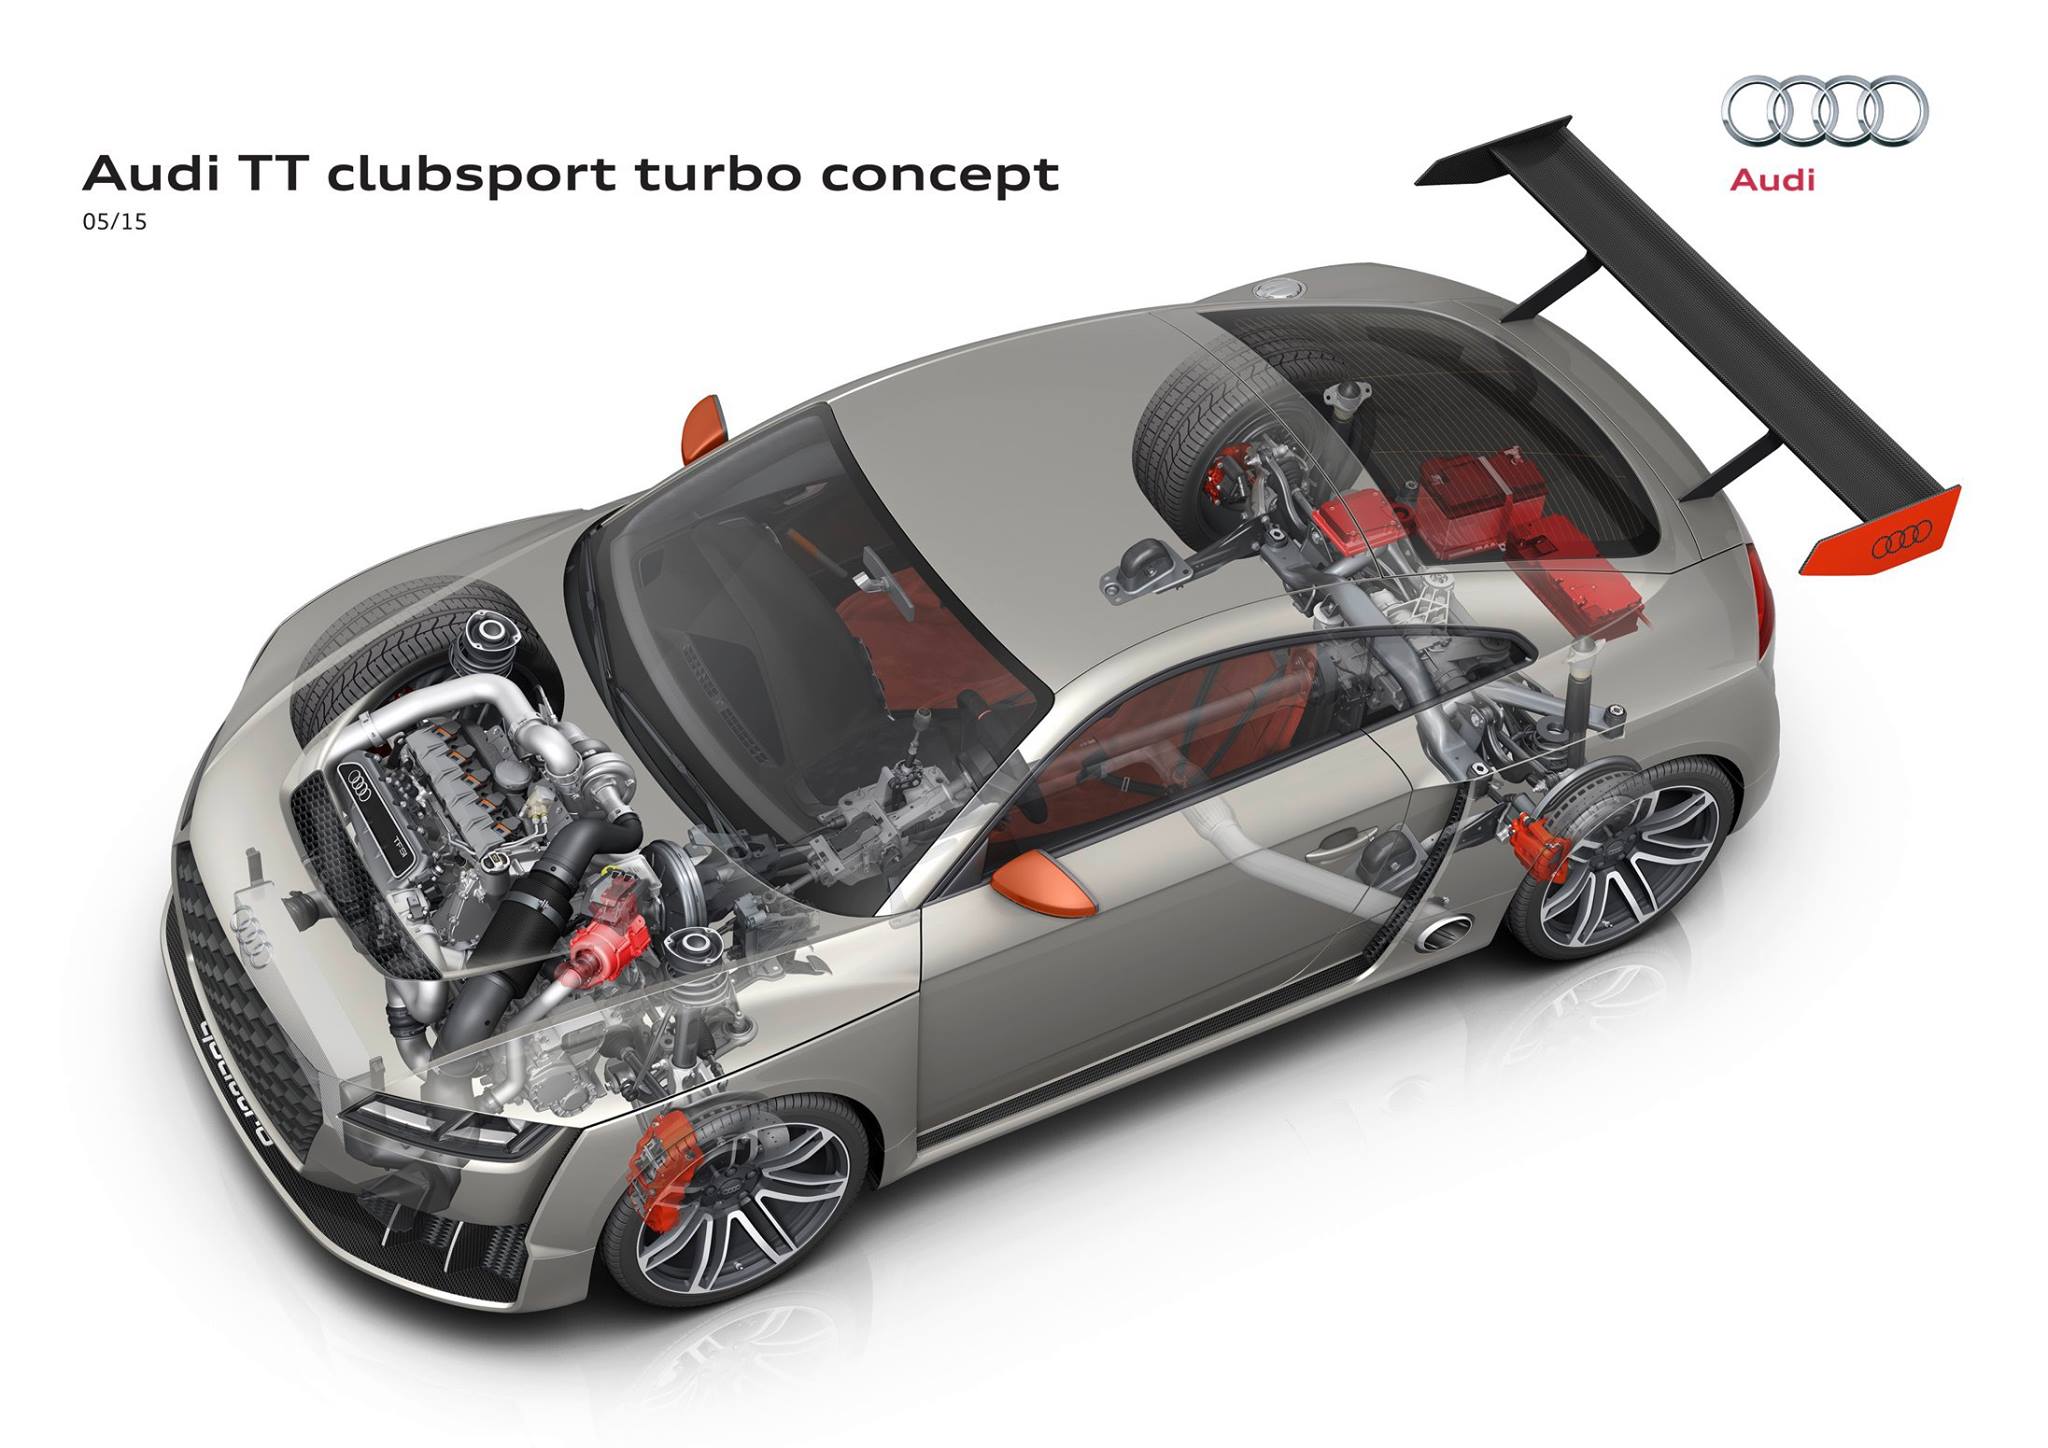 Audi TT clubsport turbo concept - powertains turbo